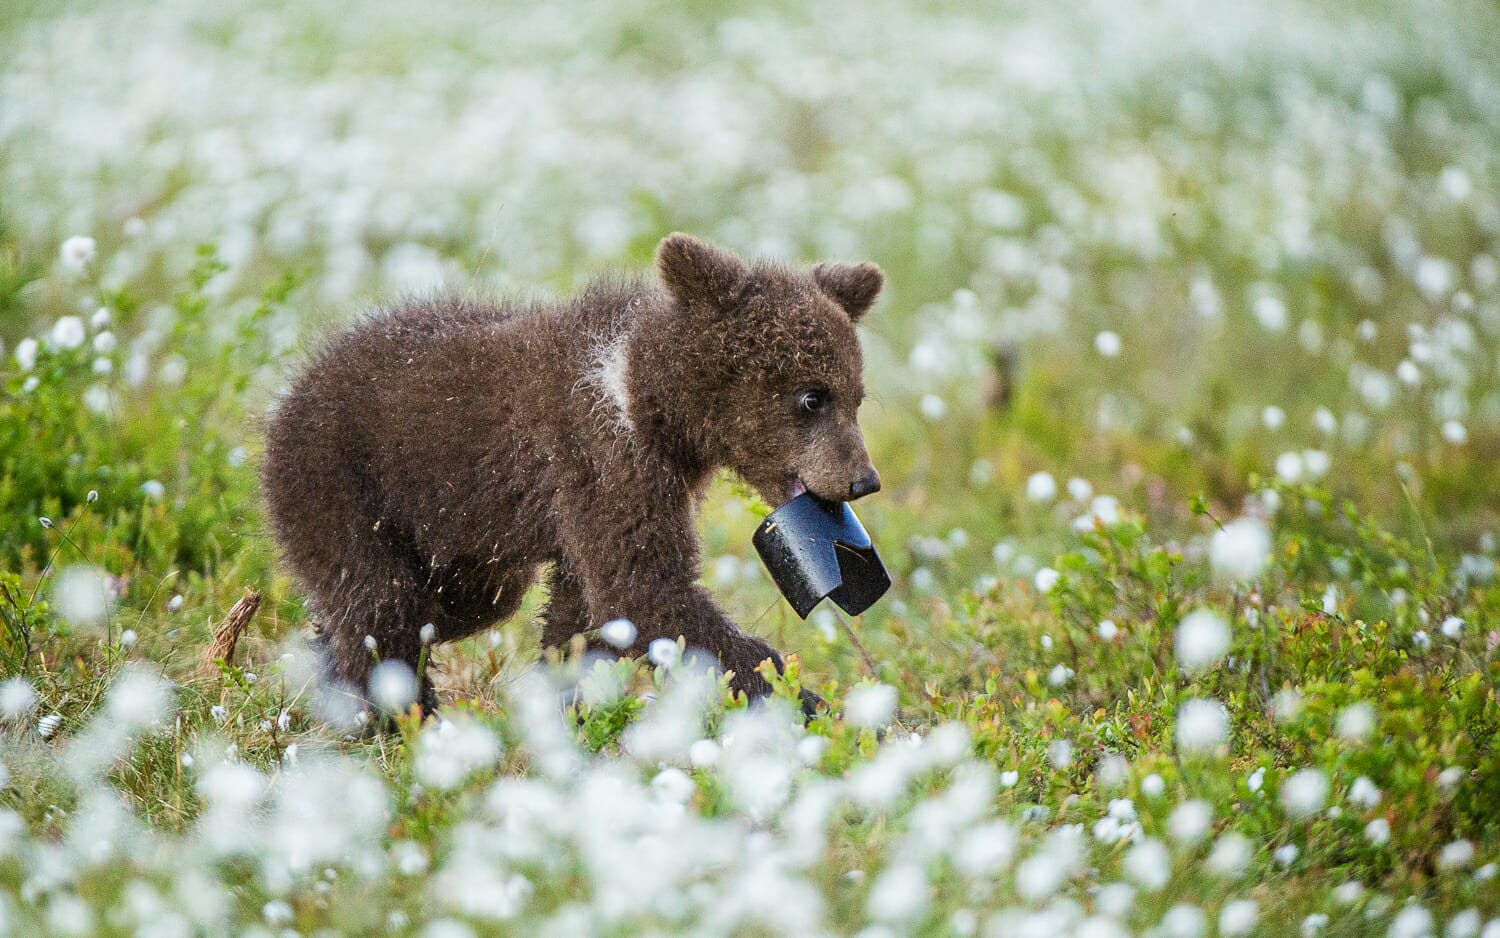 Bear cub carrying camera lens hood in mouth